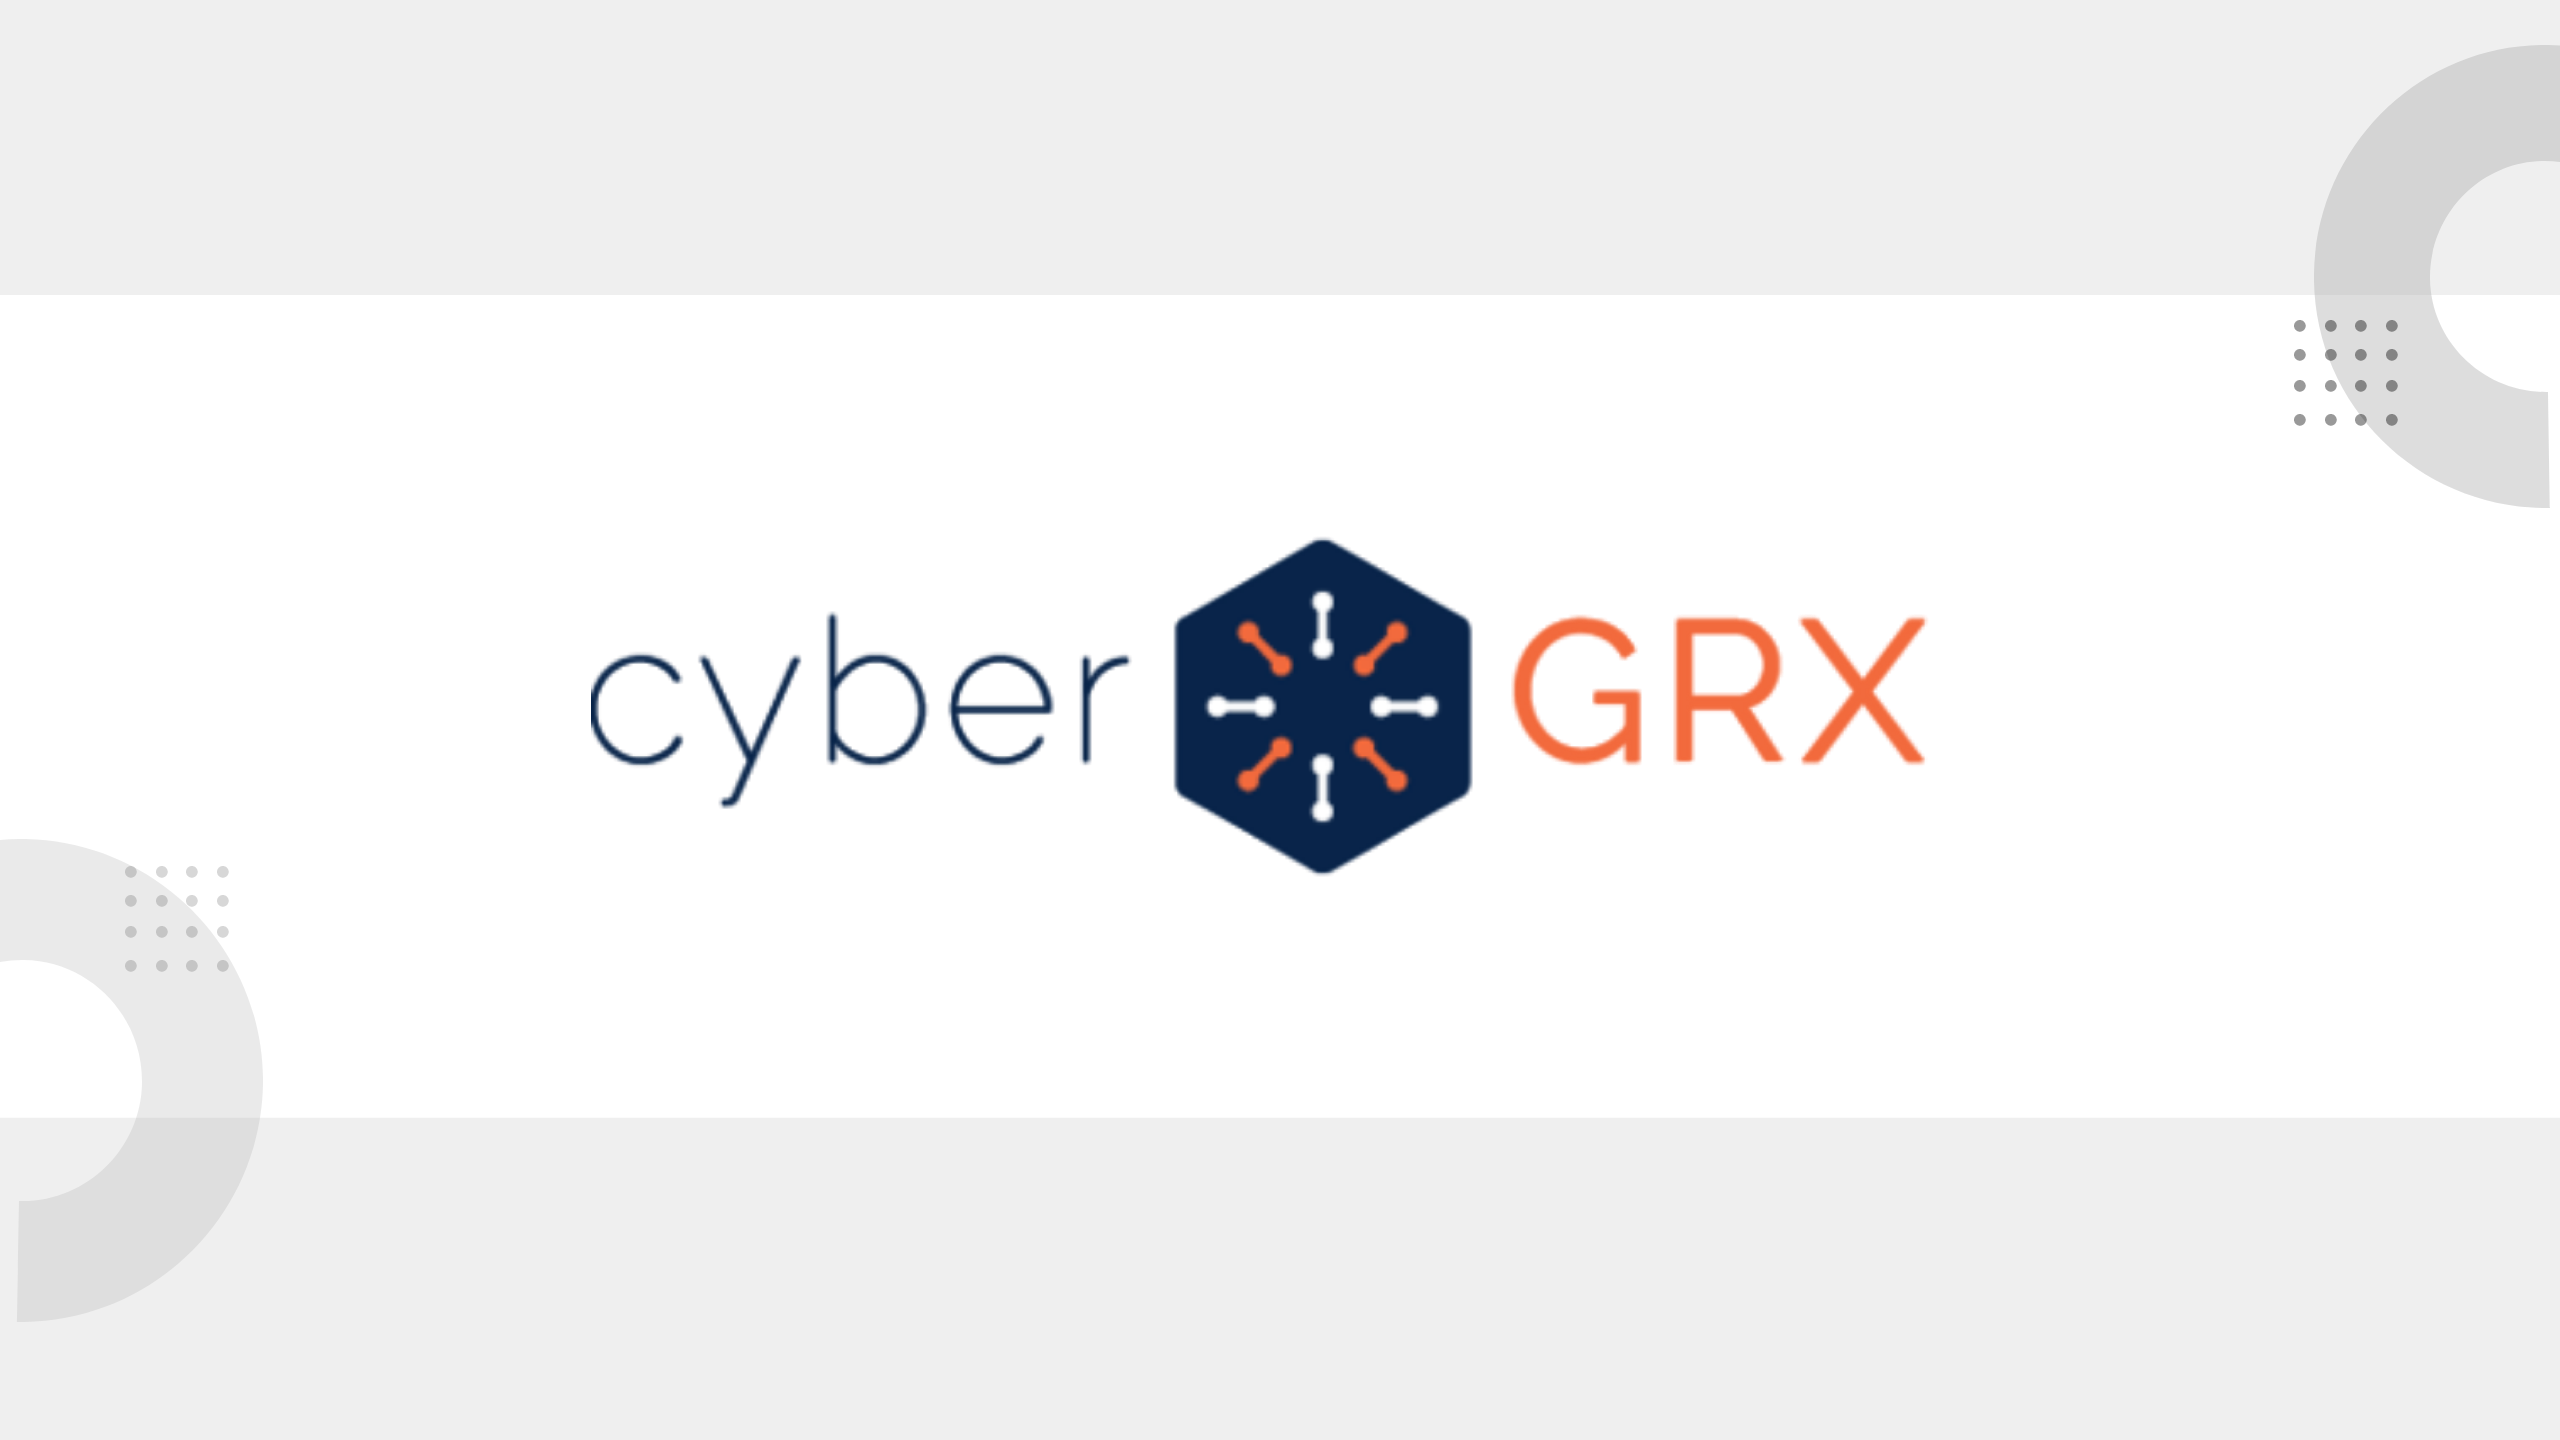 Cyber GRX